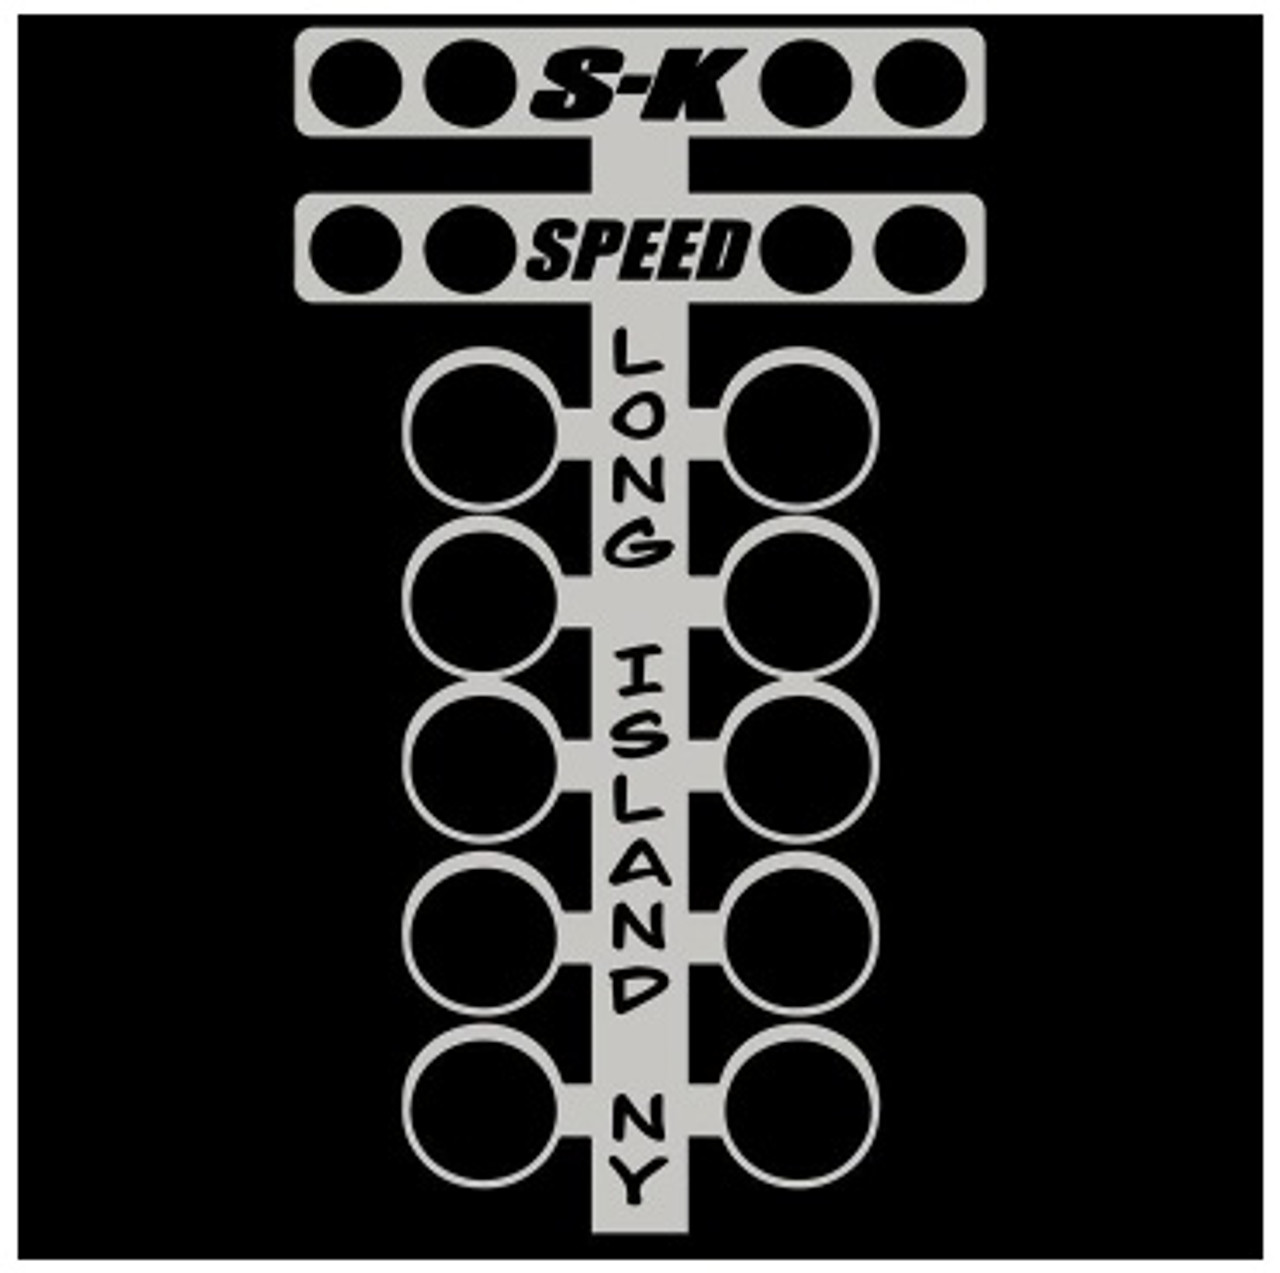 SK Speed T Shirt - Youth Large - Black Flag / Tree Logo